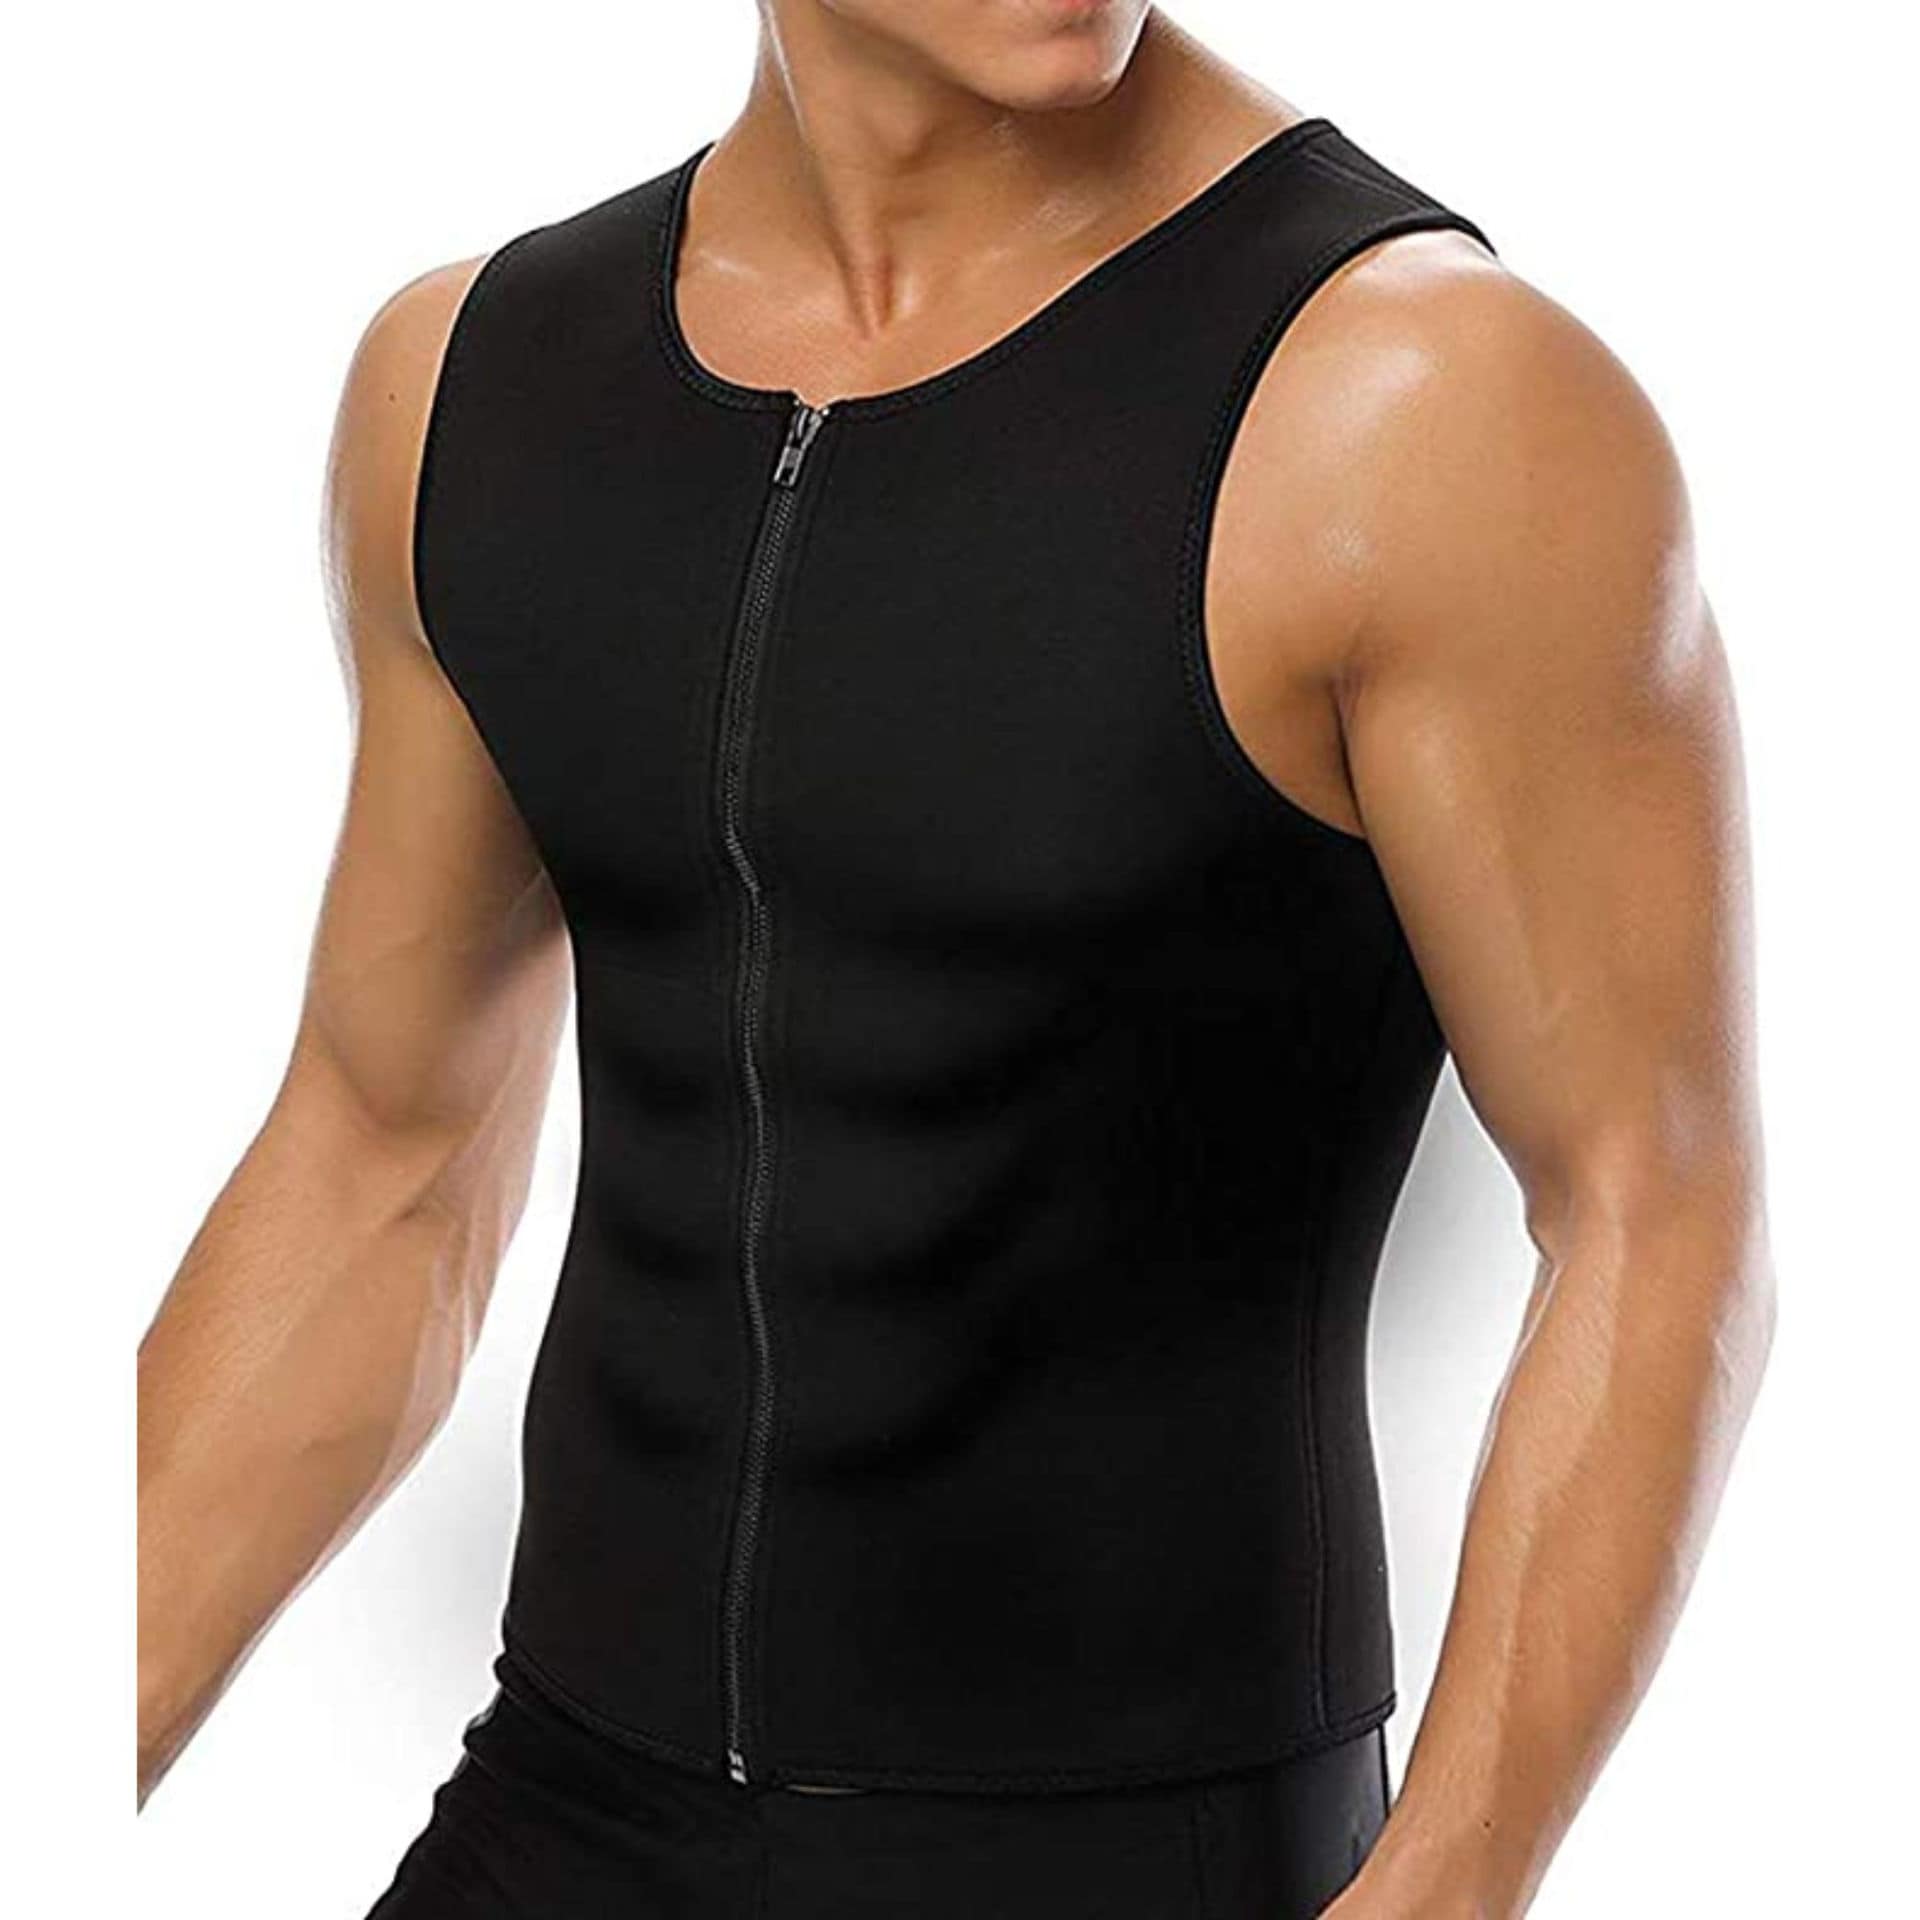 Shop Generic Hot Neoprene Body Shaper with Zipper Workout Shirt for Men's